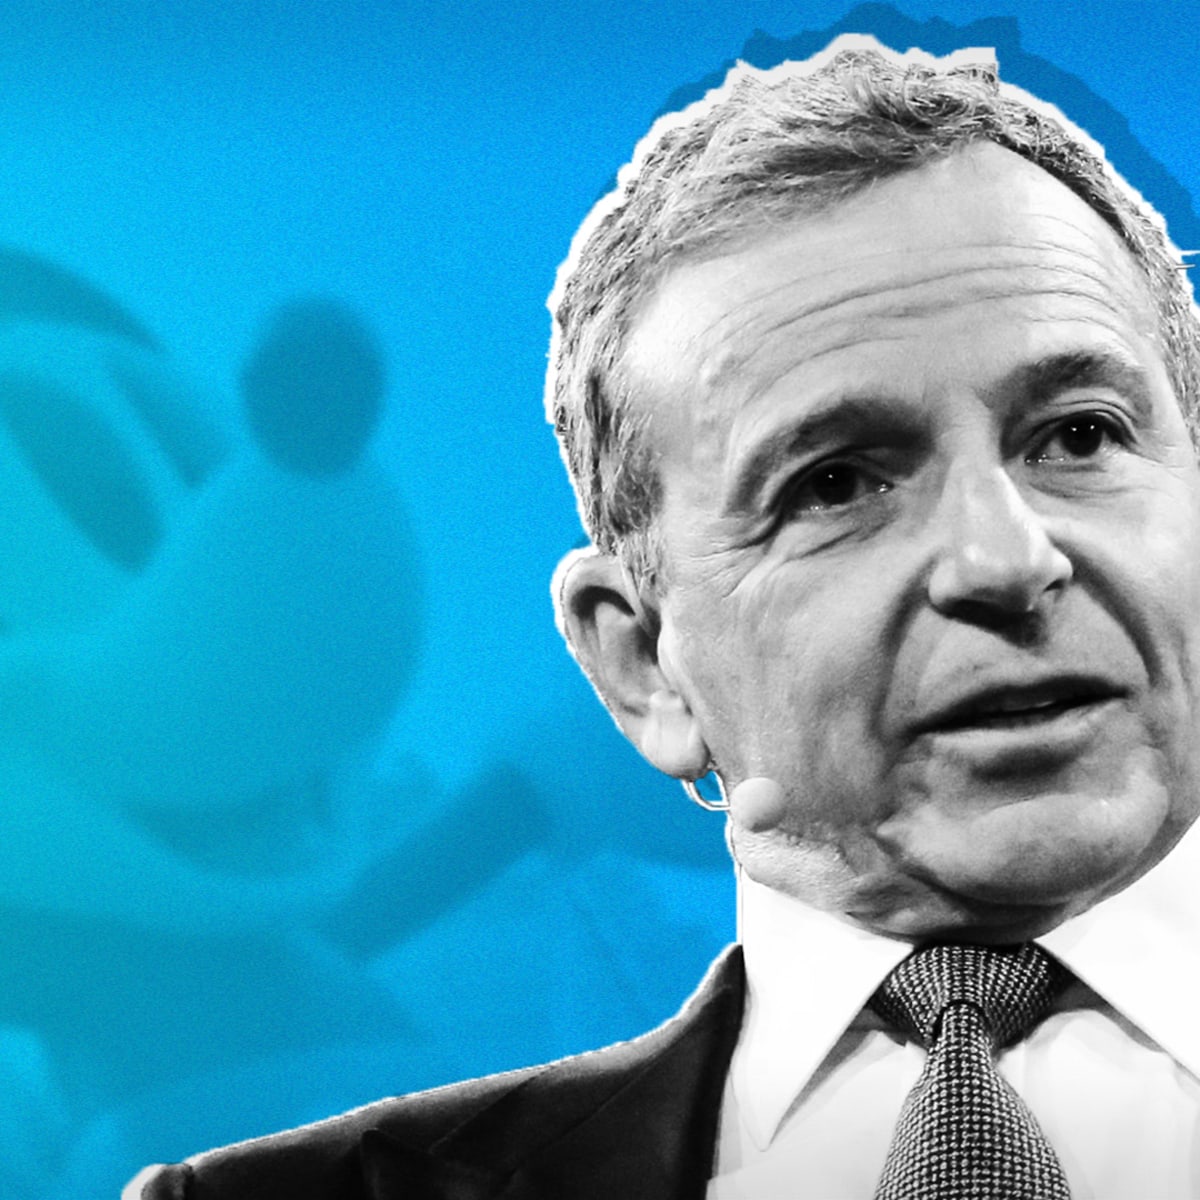 How Returning Disney CEO Bob Iger Makes, Spends Money: Wealth, Career